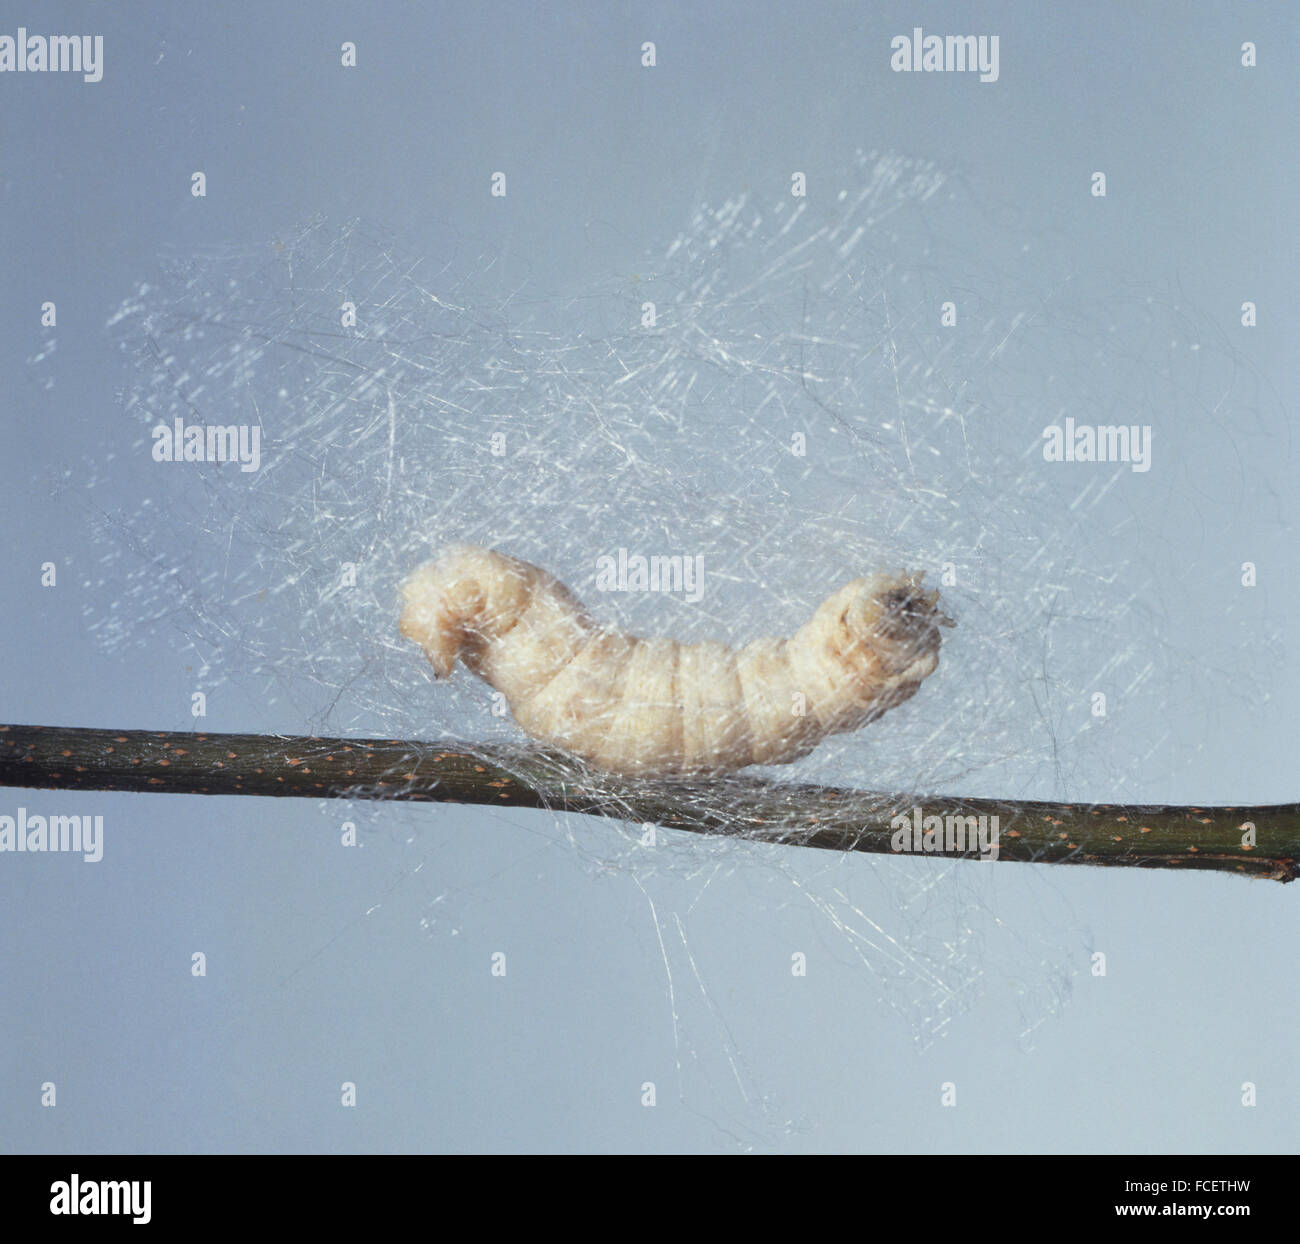 Bombyx mori (Silkworm), a silk worm spinning its cocoon Stock Photo - Alamy